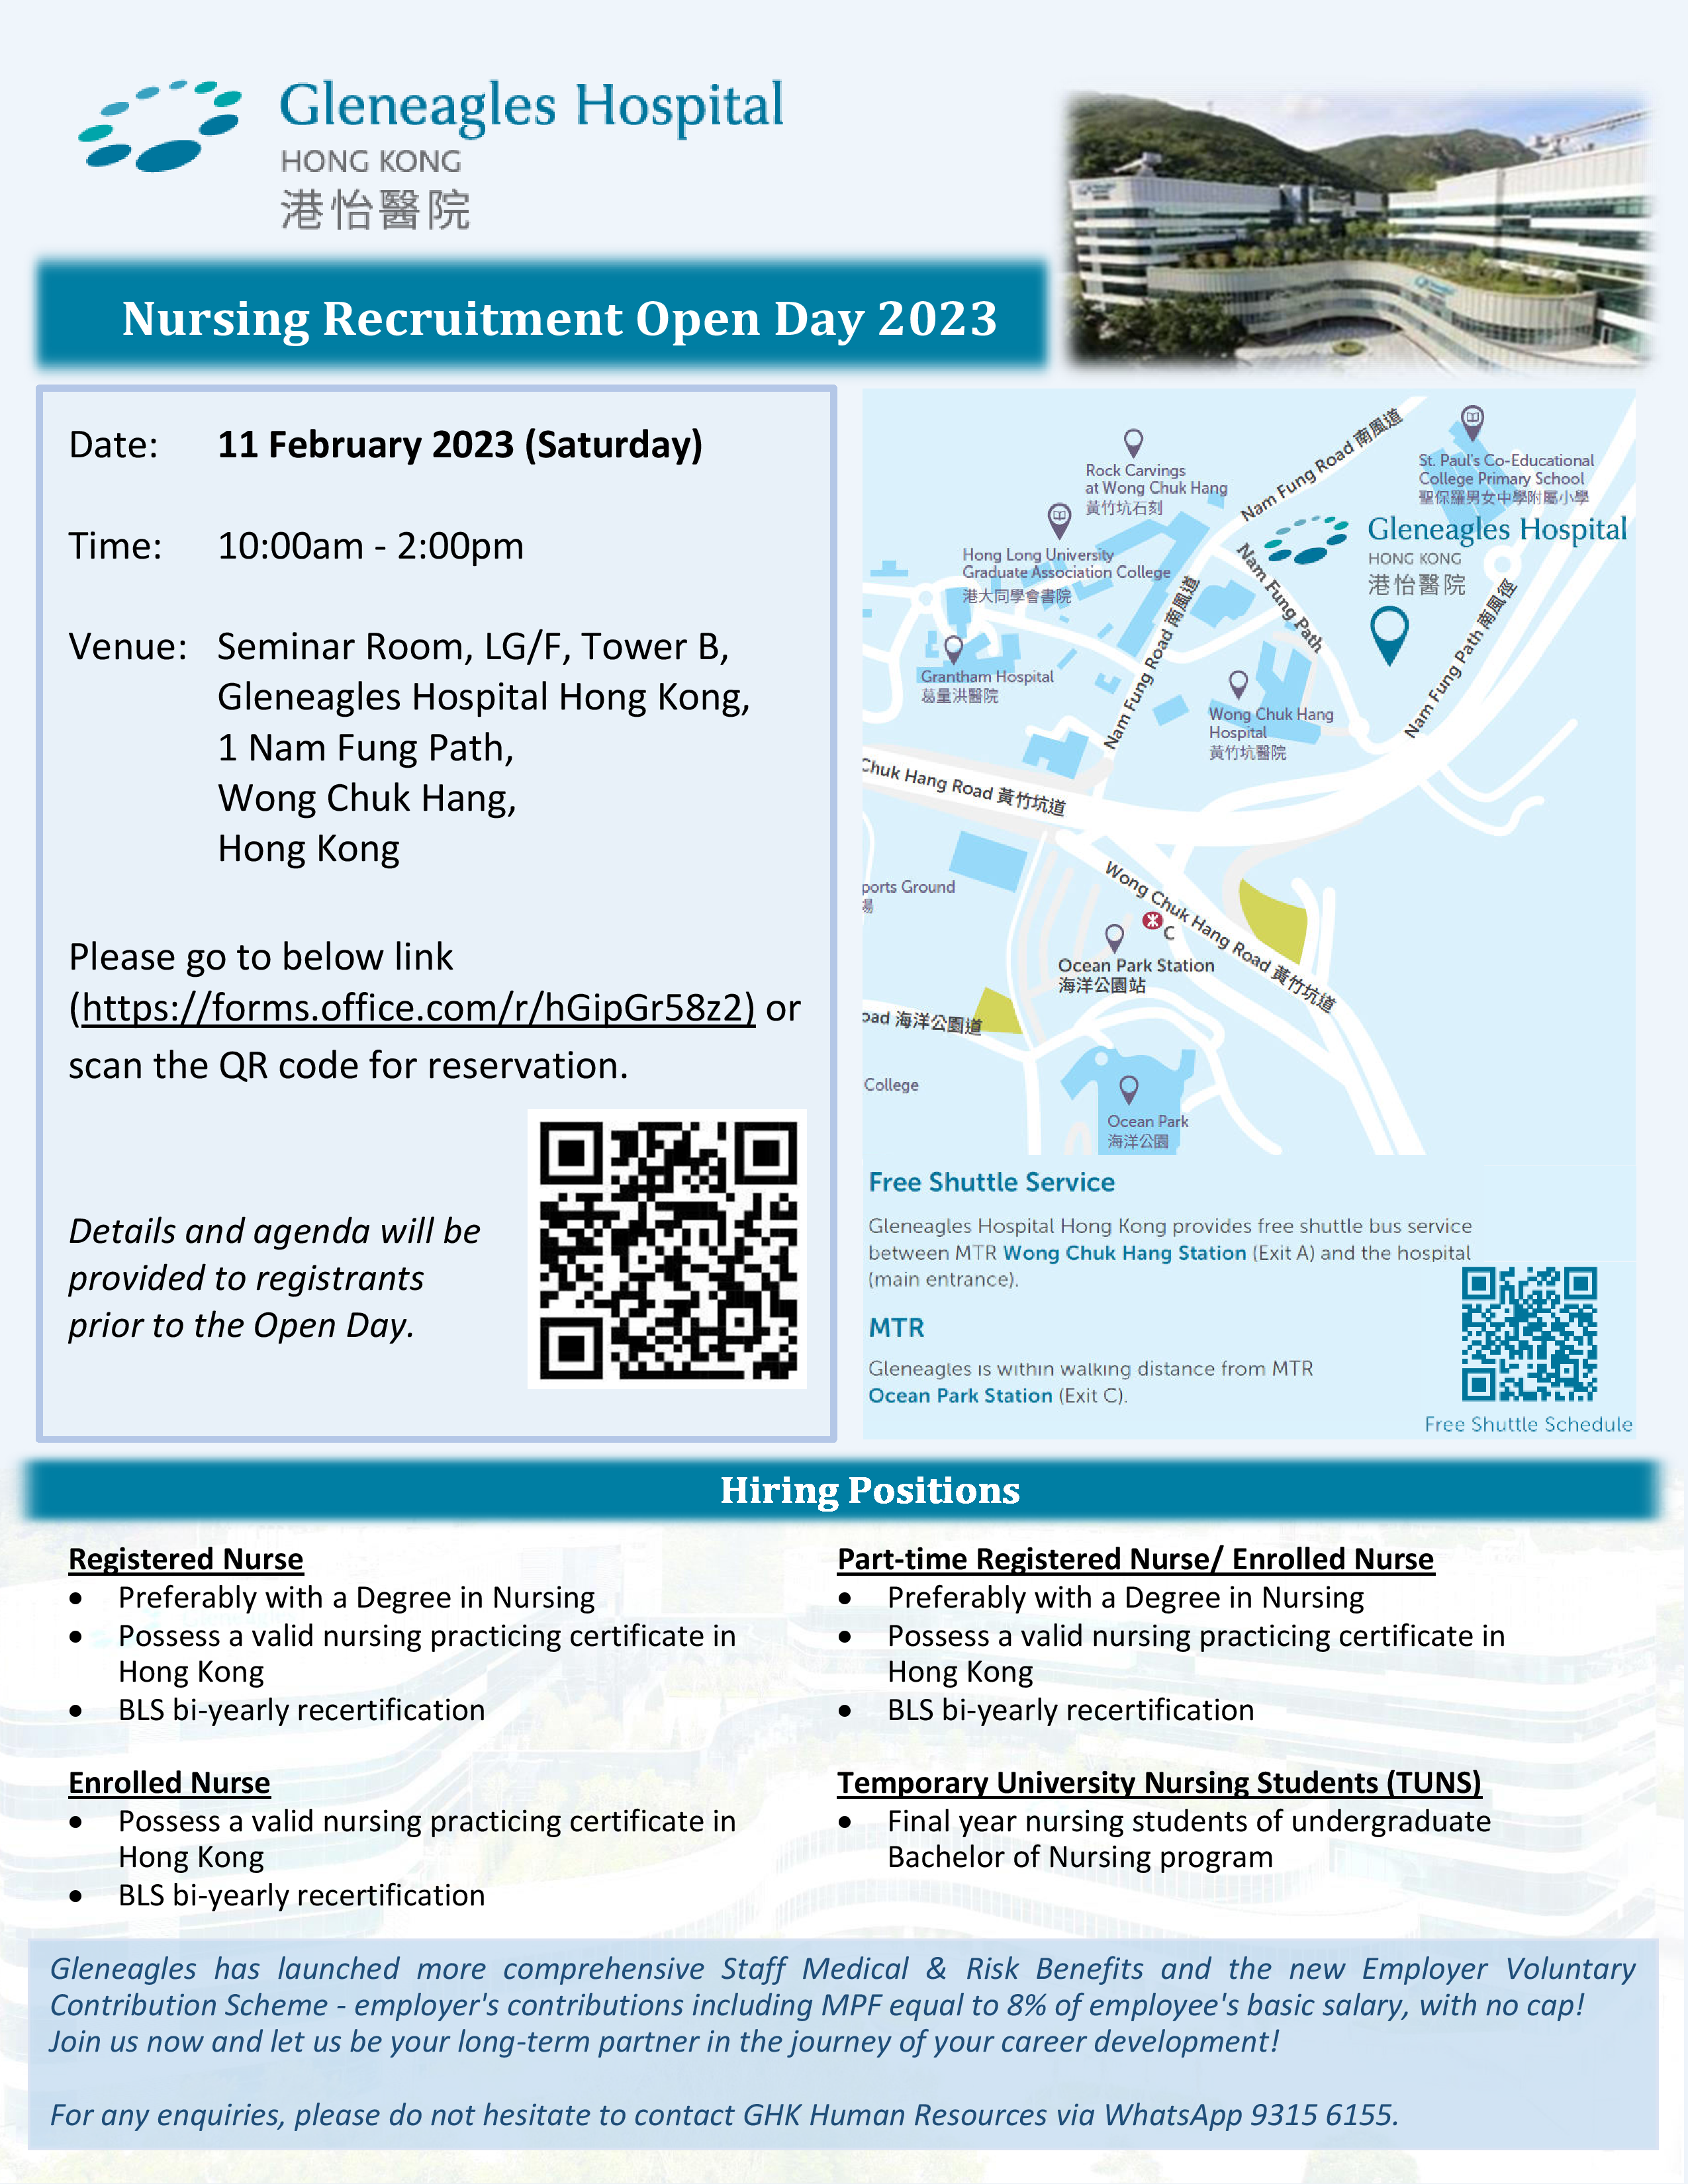 Nursing Recruitment Open Day 2023 Poster V2 Edited2 For Image Es